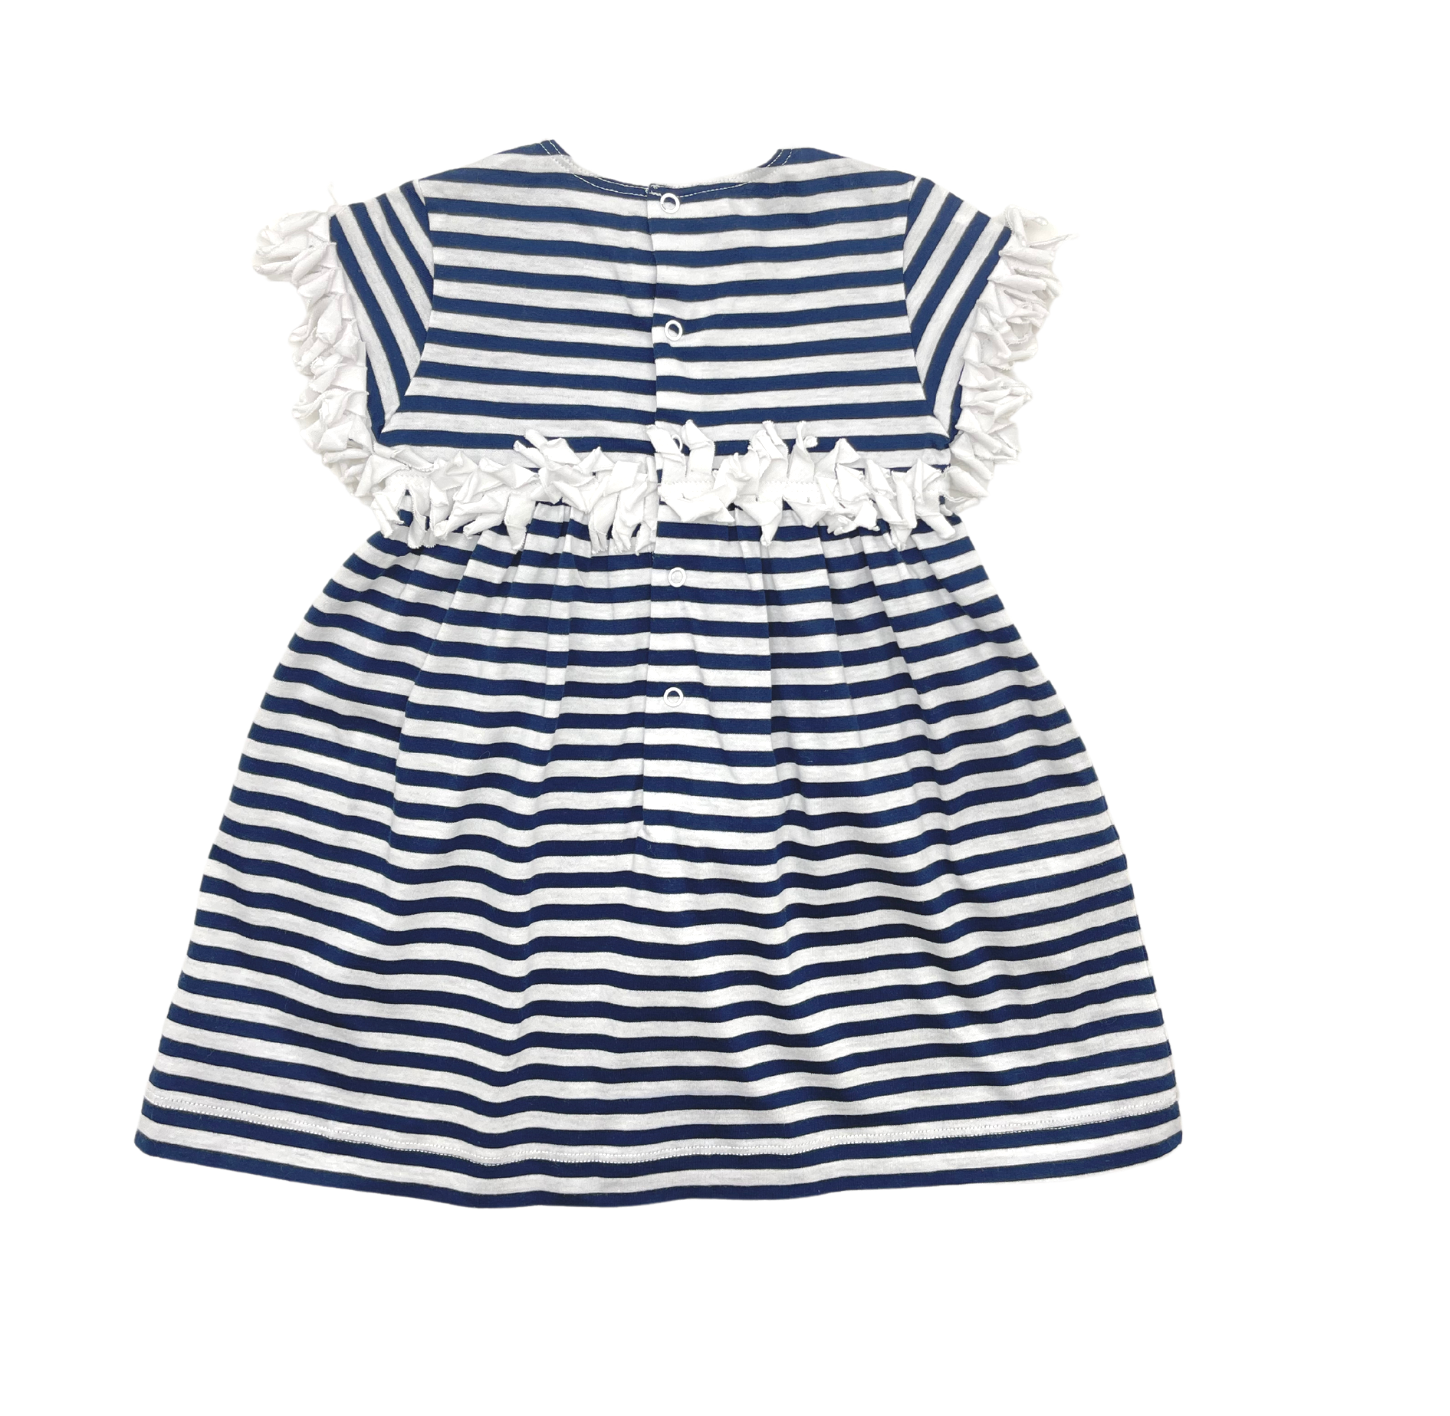 IL GUFO - Striped dress - 1 year old